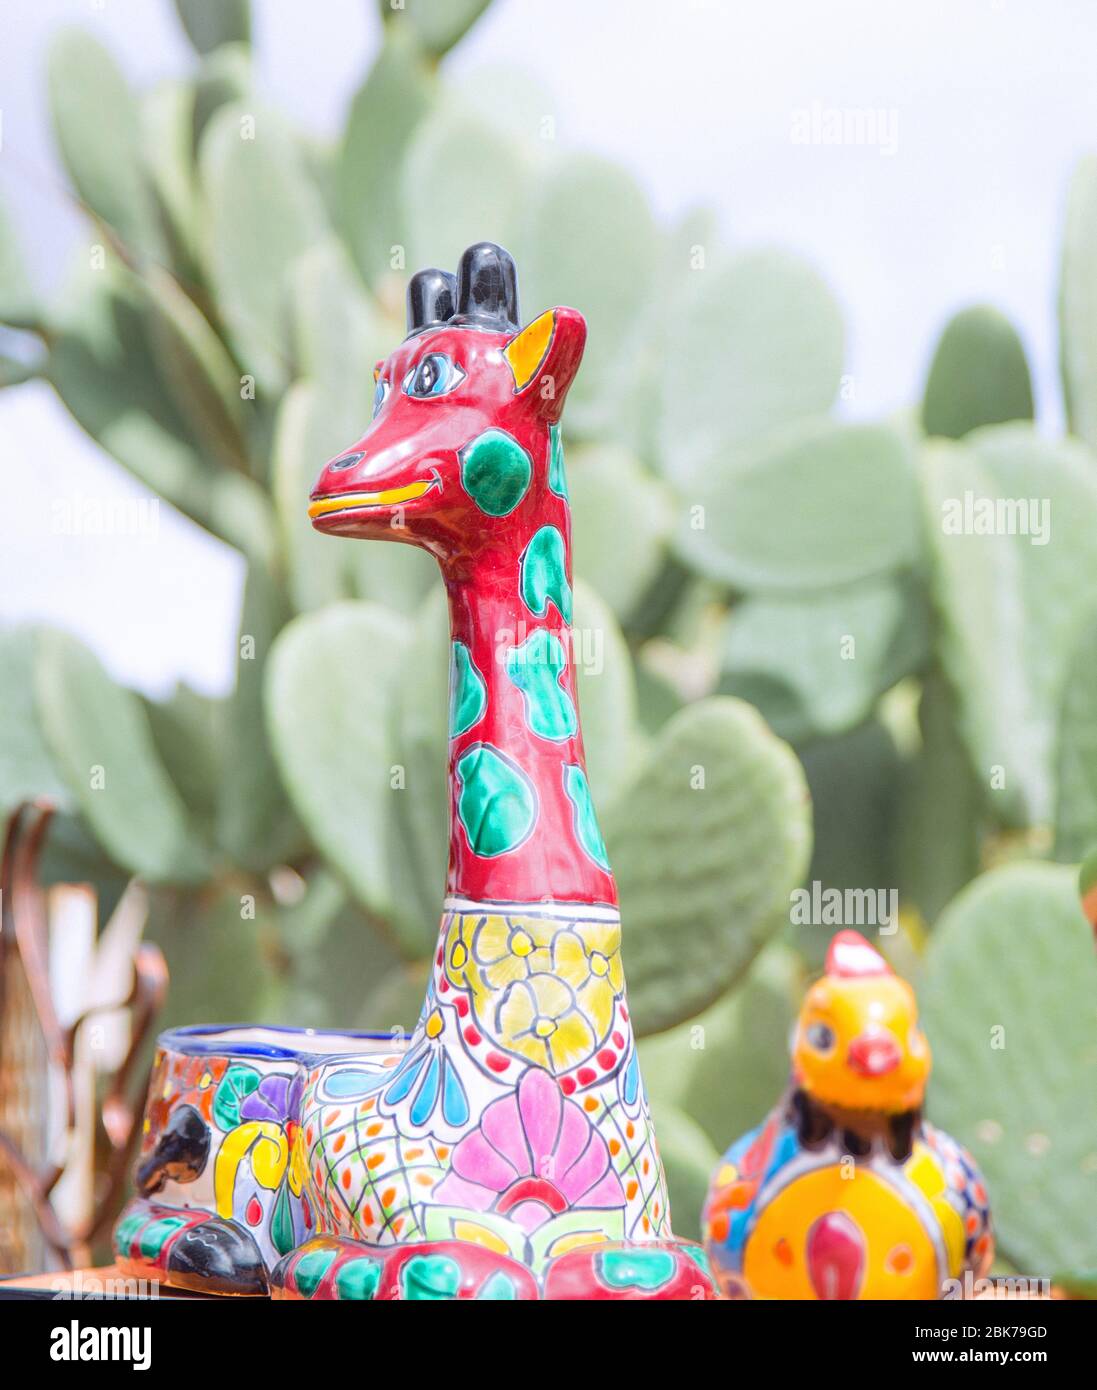 Keramik Giraffe mit bunten Farben Stockfoto